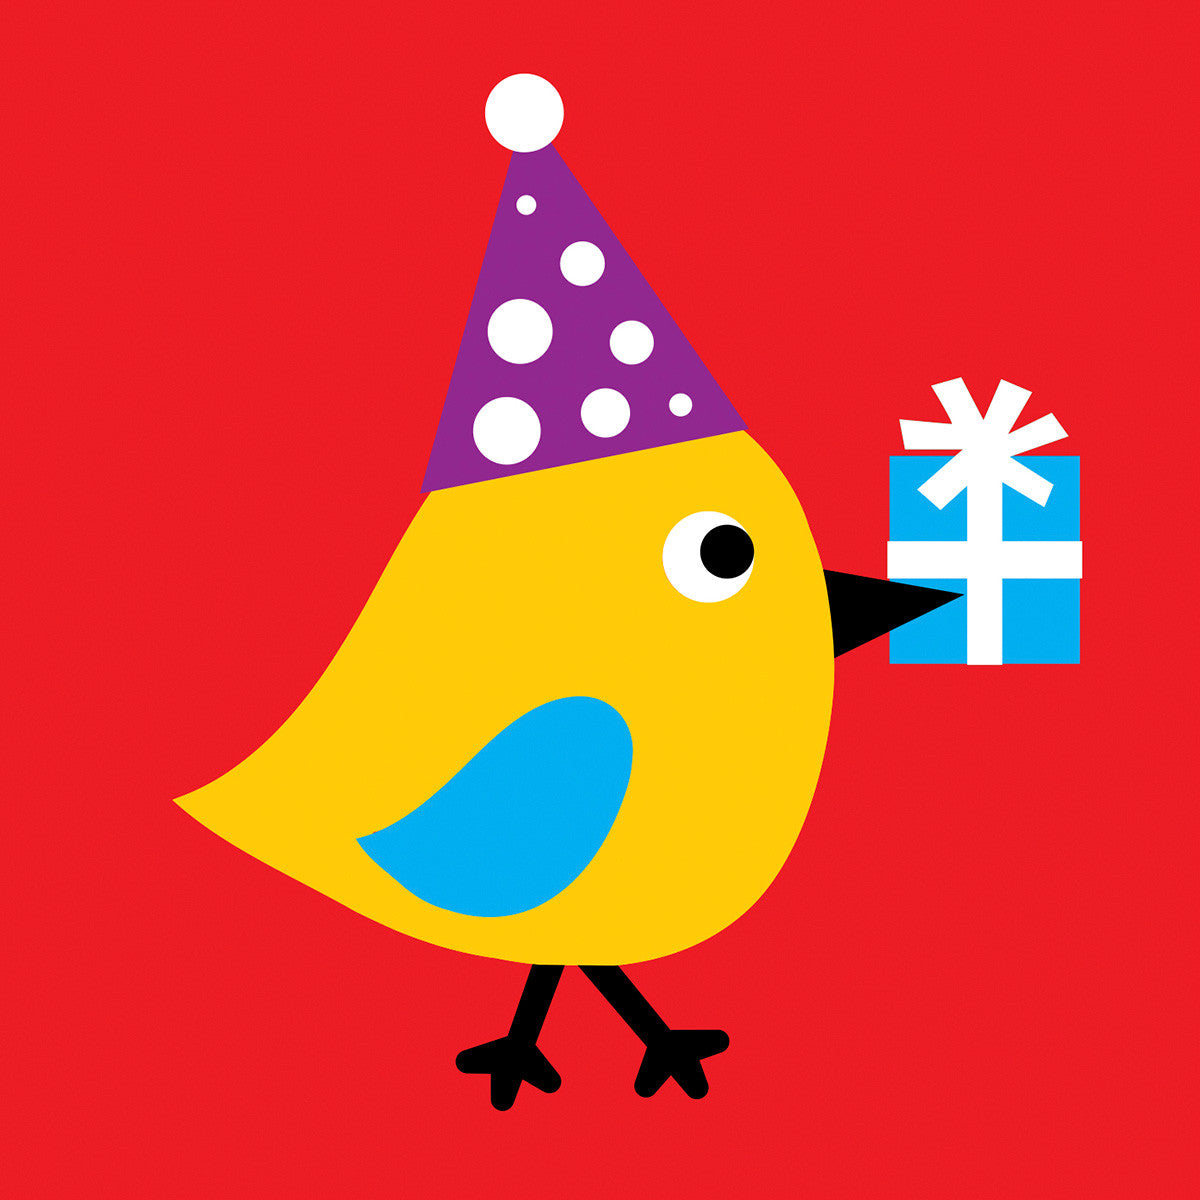 Bird with a present card